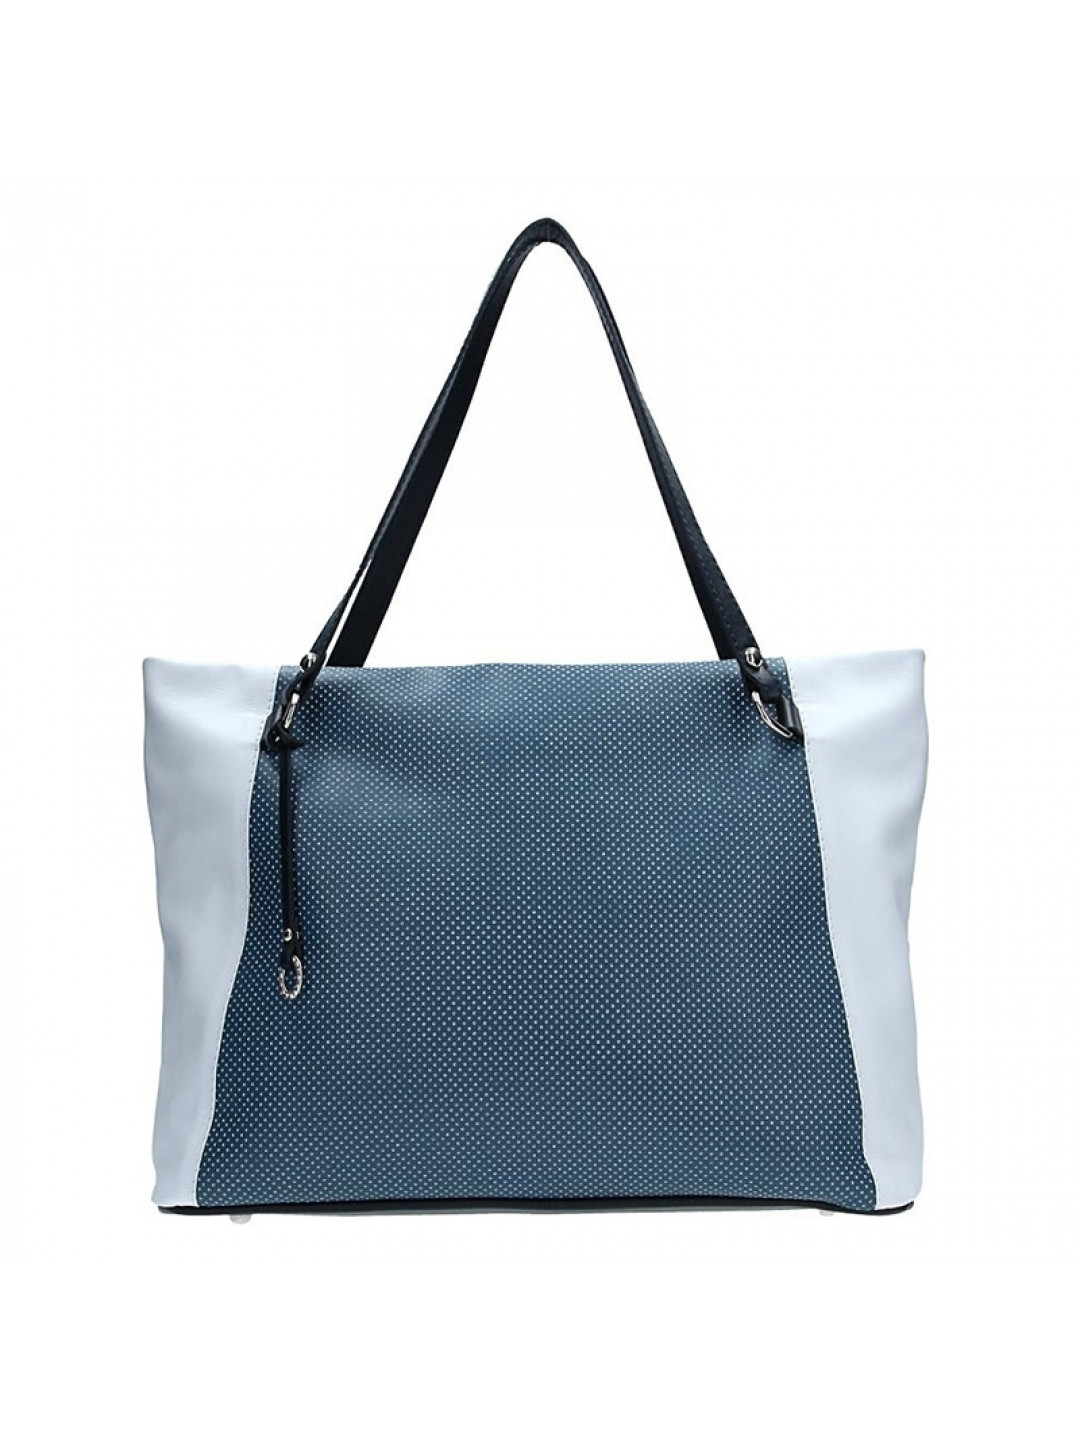 Dámská kožená kabelka Facebag Joana – modro-bílá